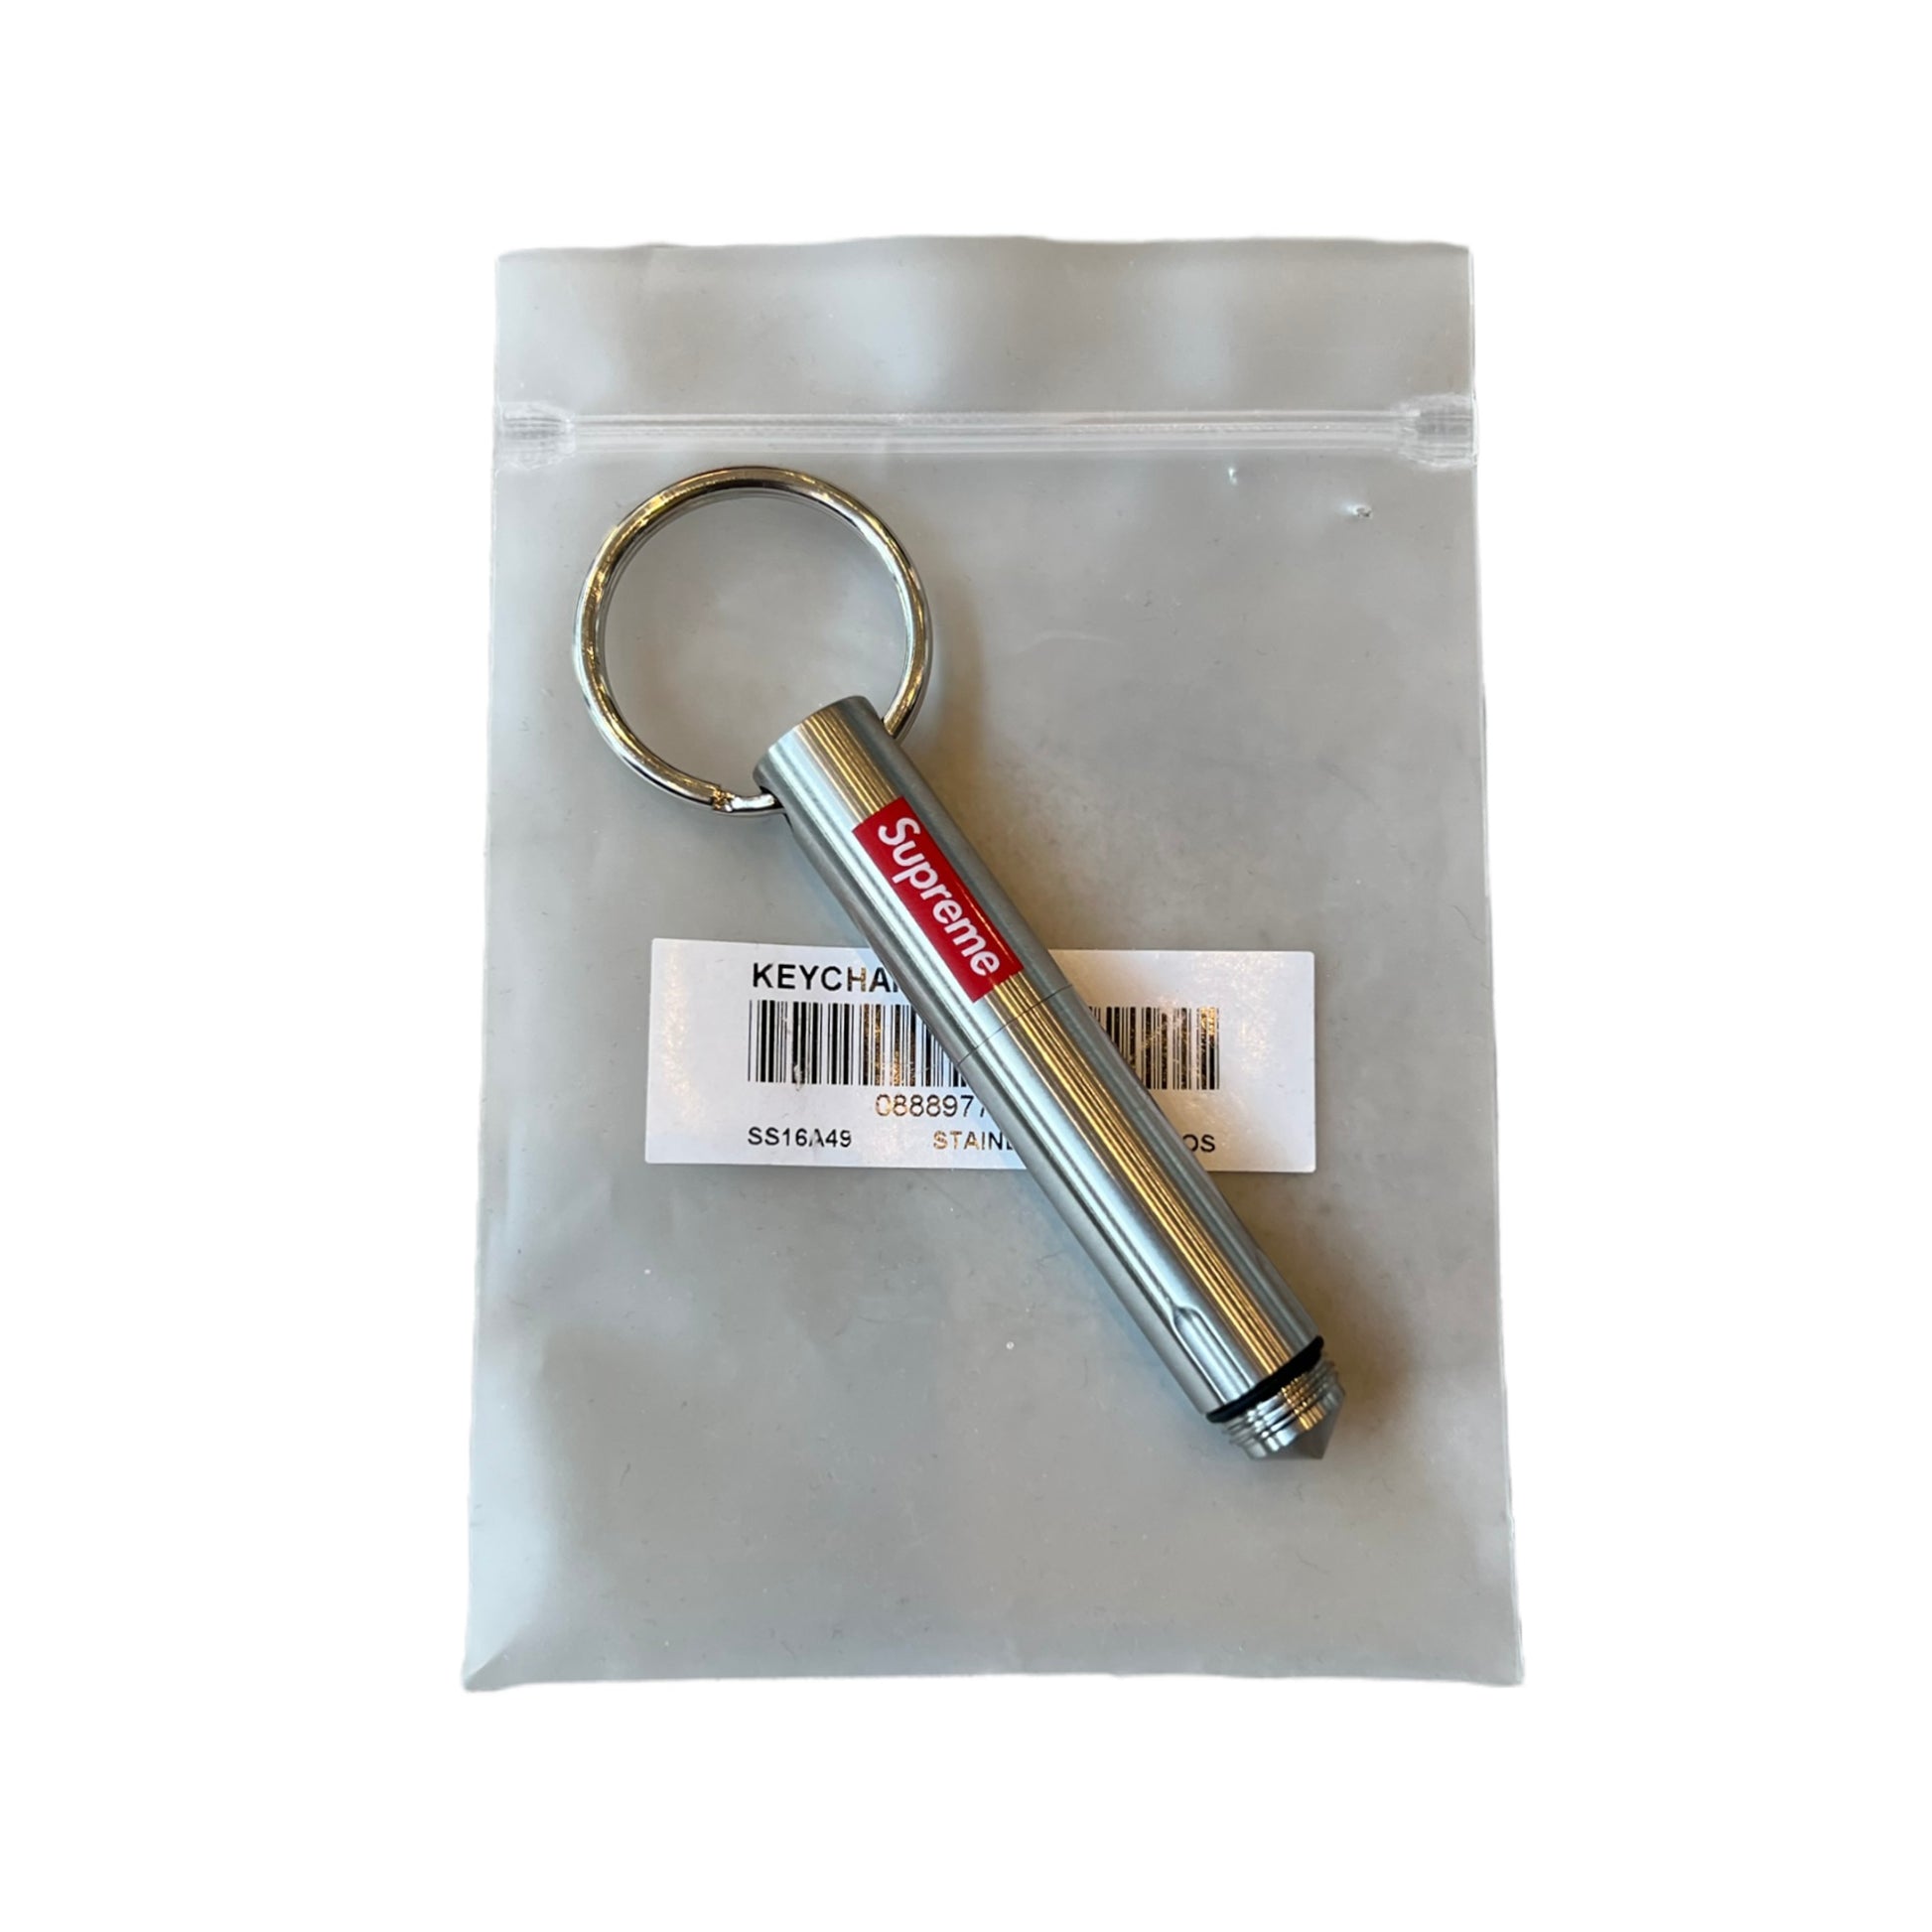 Supreme Stainless Steel Keychain Pen